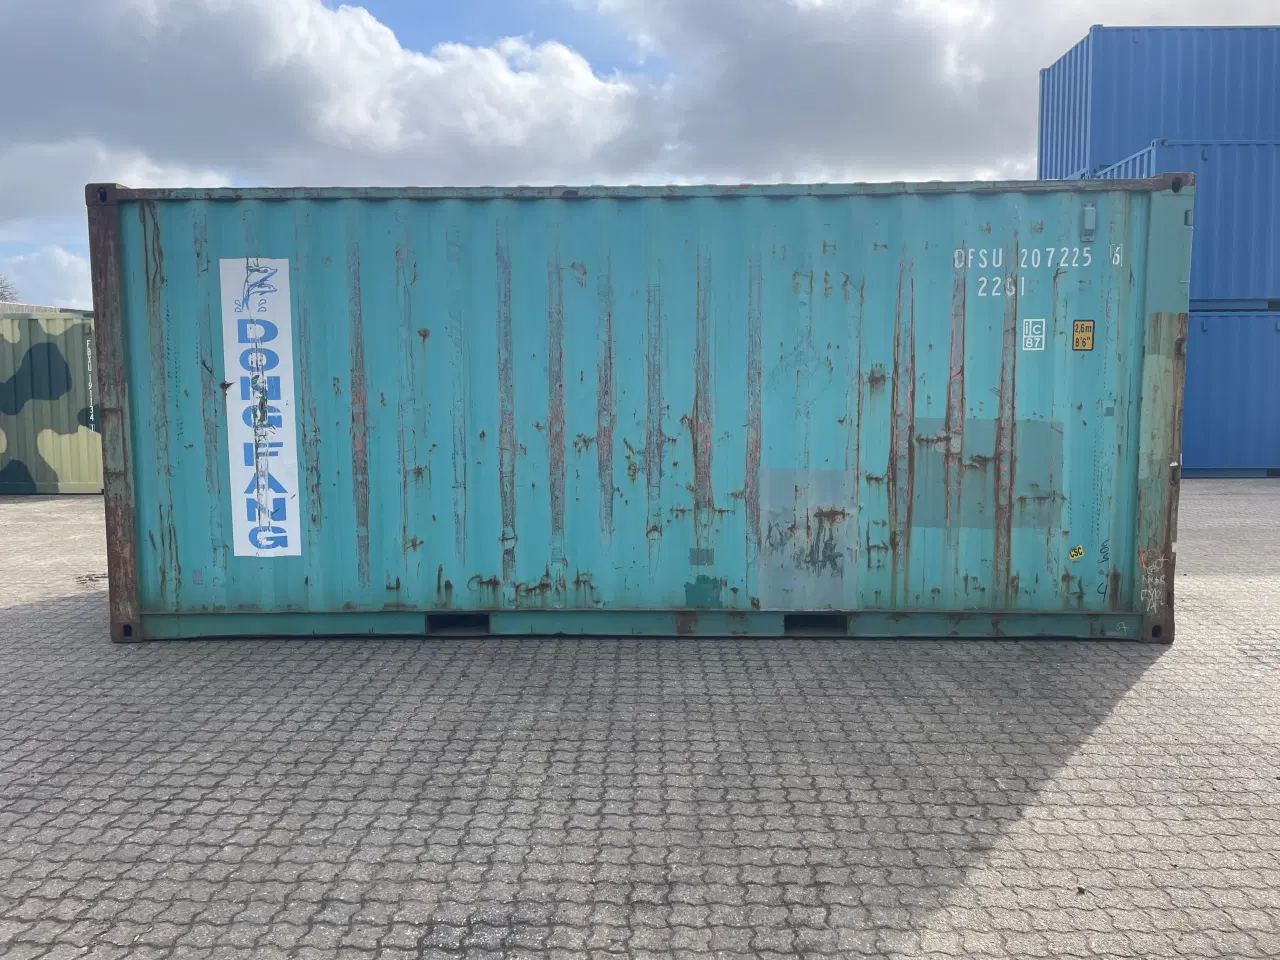 Billede 4 - 20 fods Container - ID: DFSU 207225-6